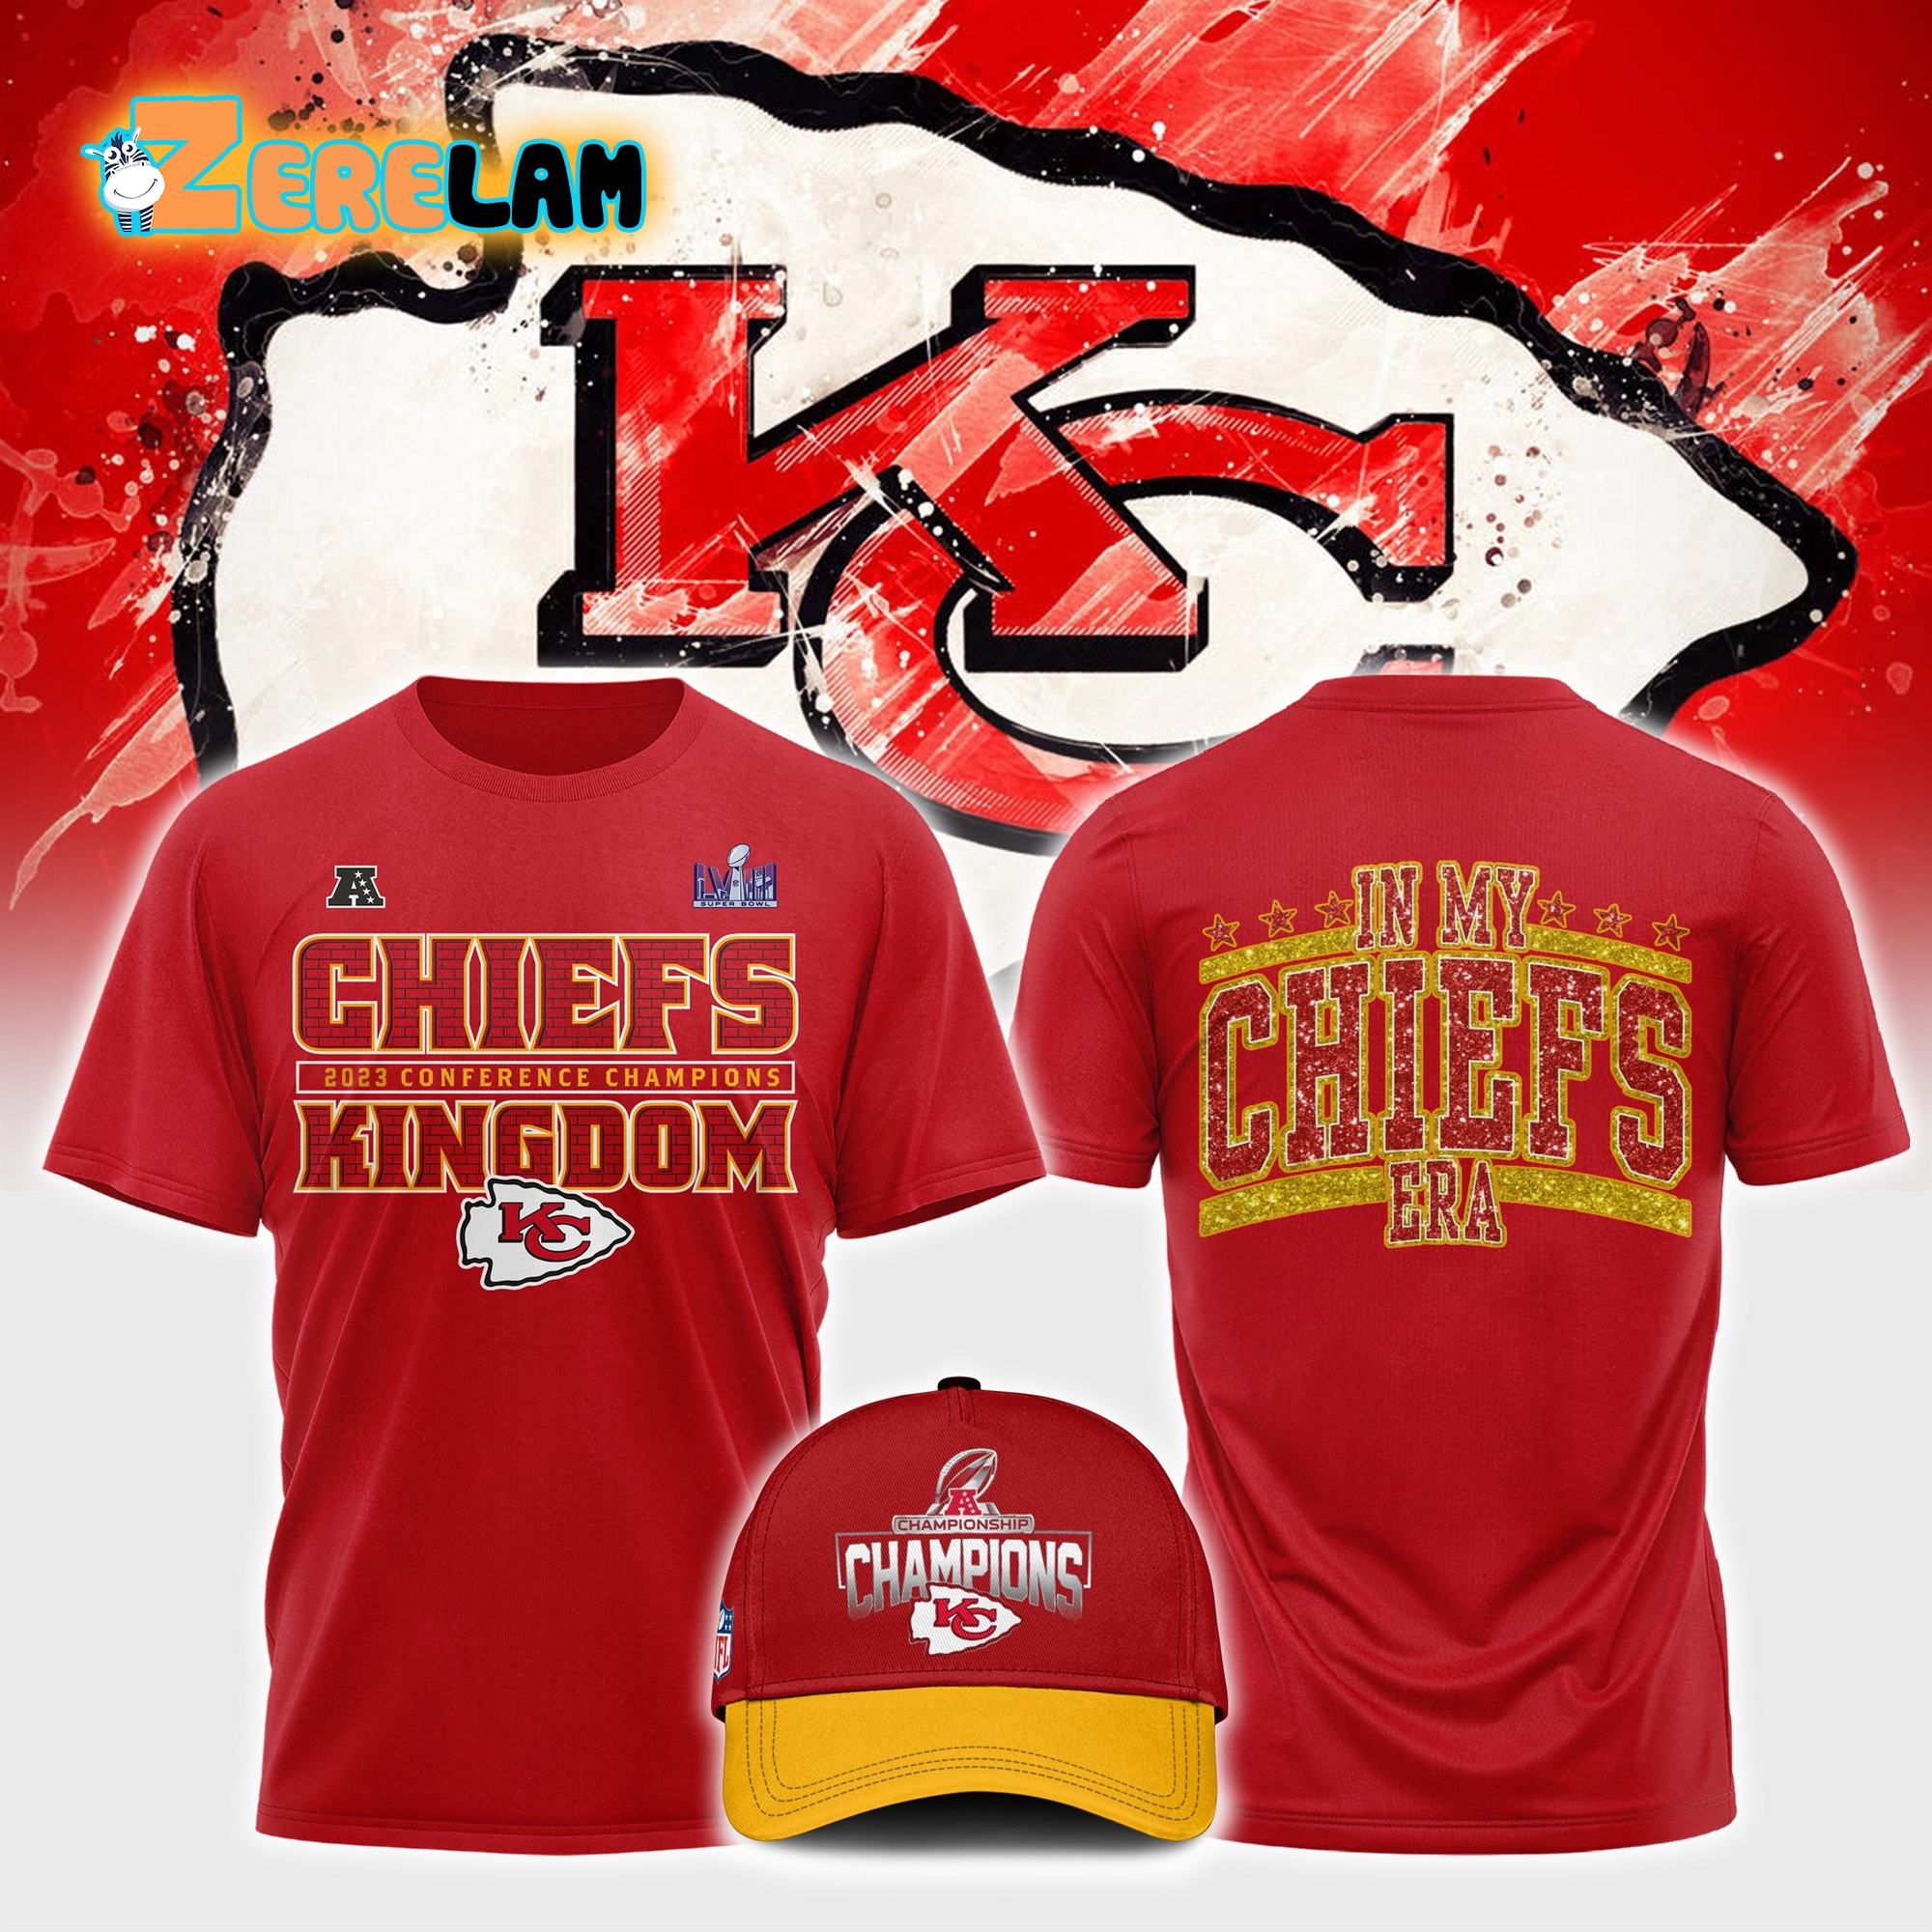 2023 Conference Champions Chiefs Kingdom In My Chiefs ERA Shirt - Zerelam